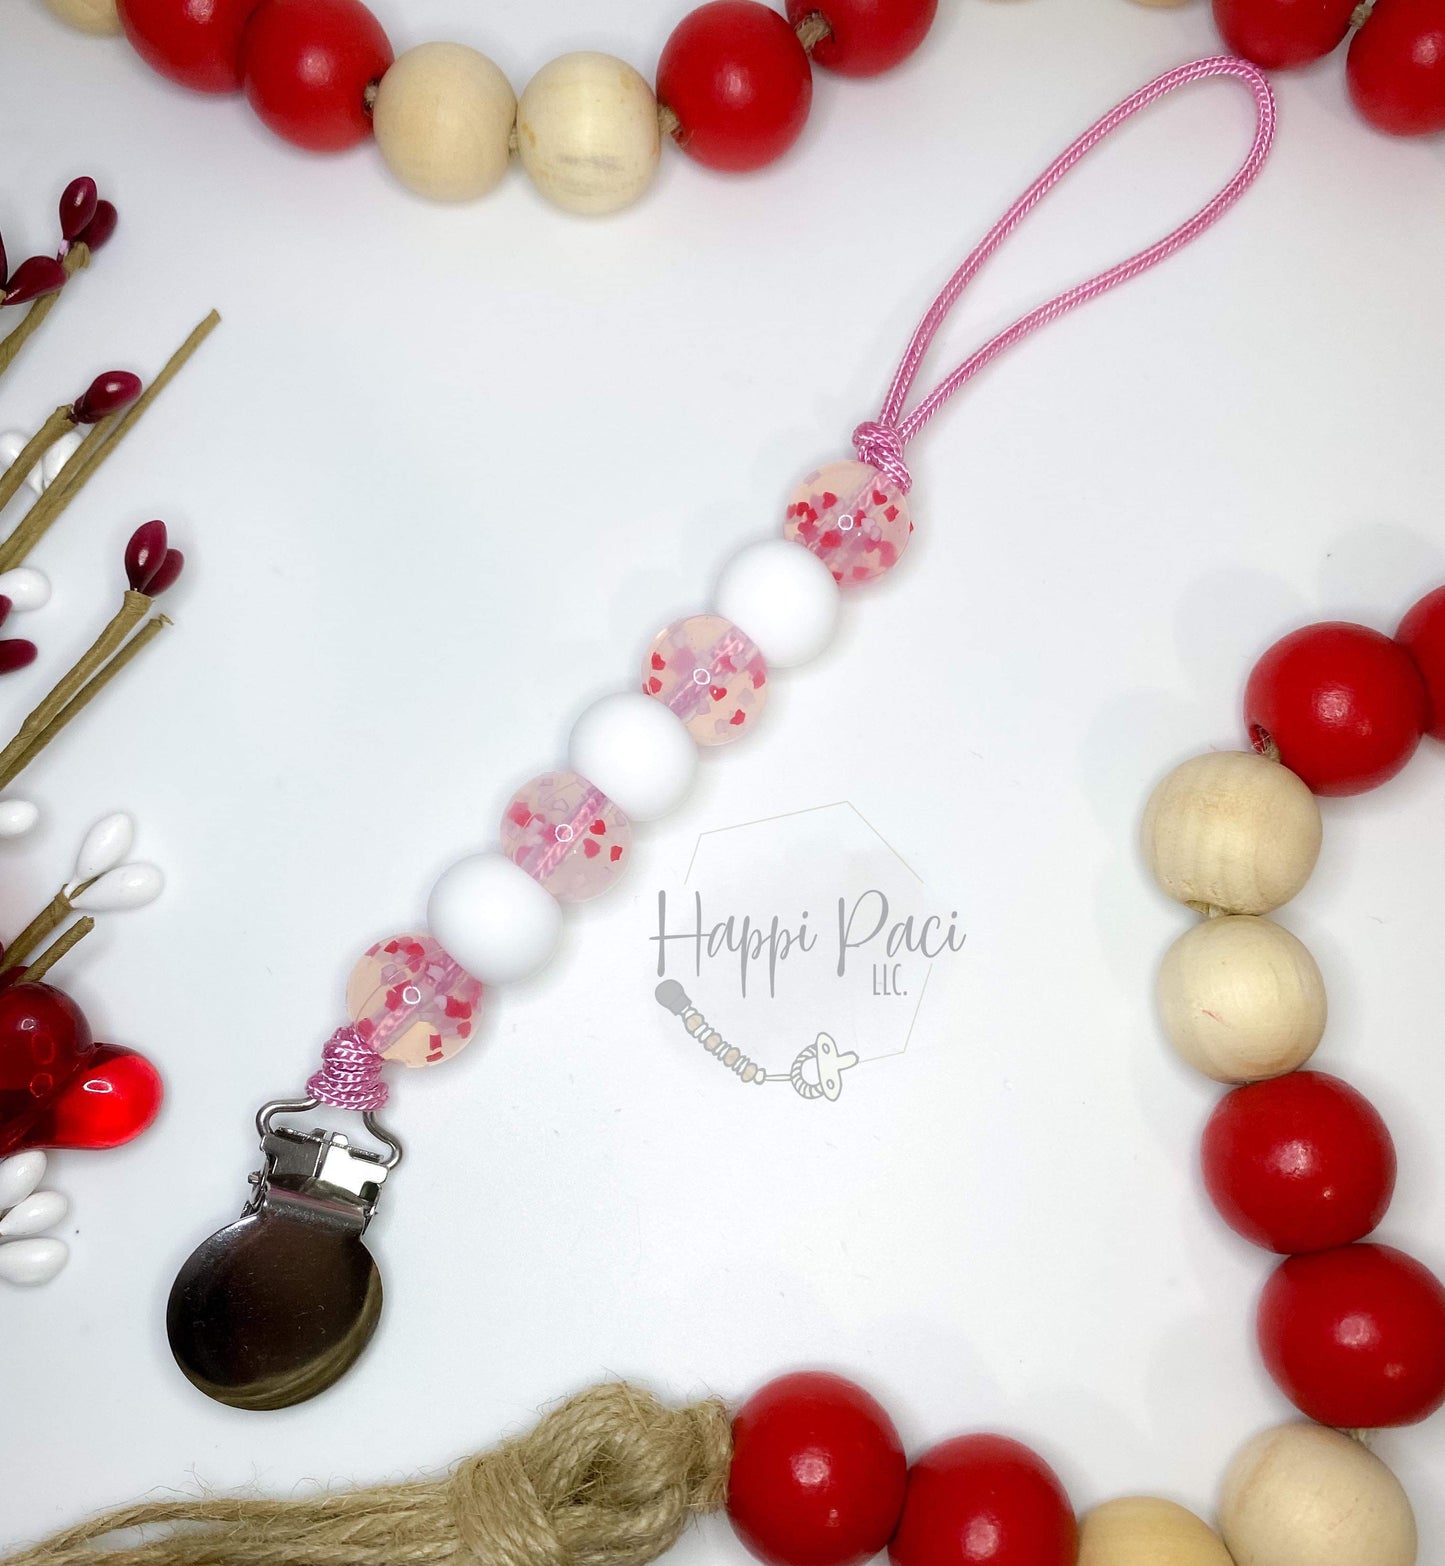 Confetti Heart Beads 12mm Bead